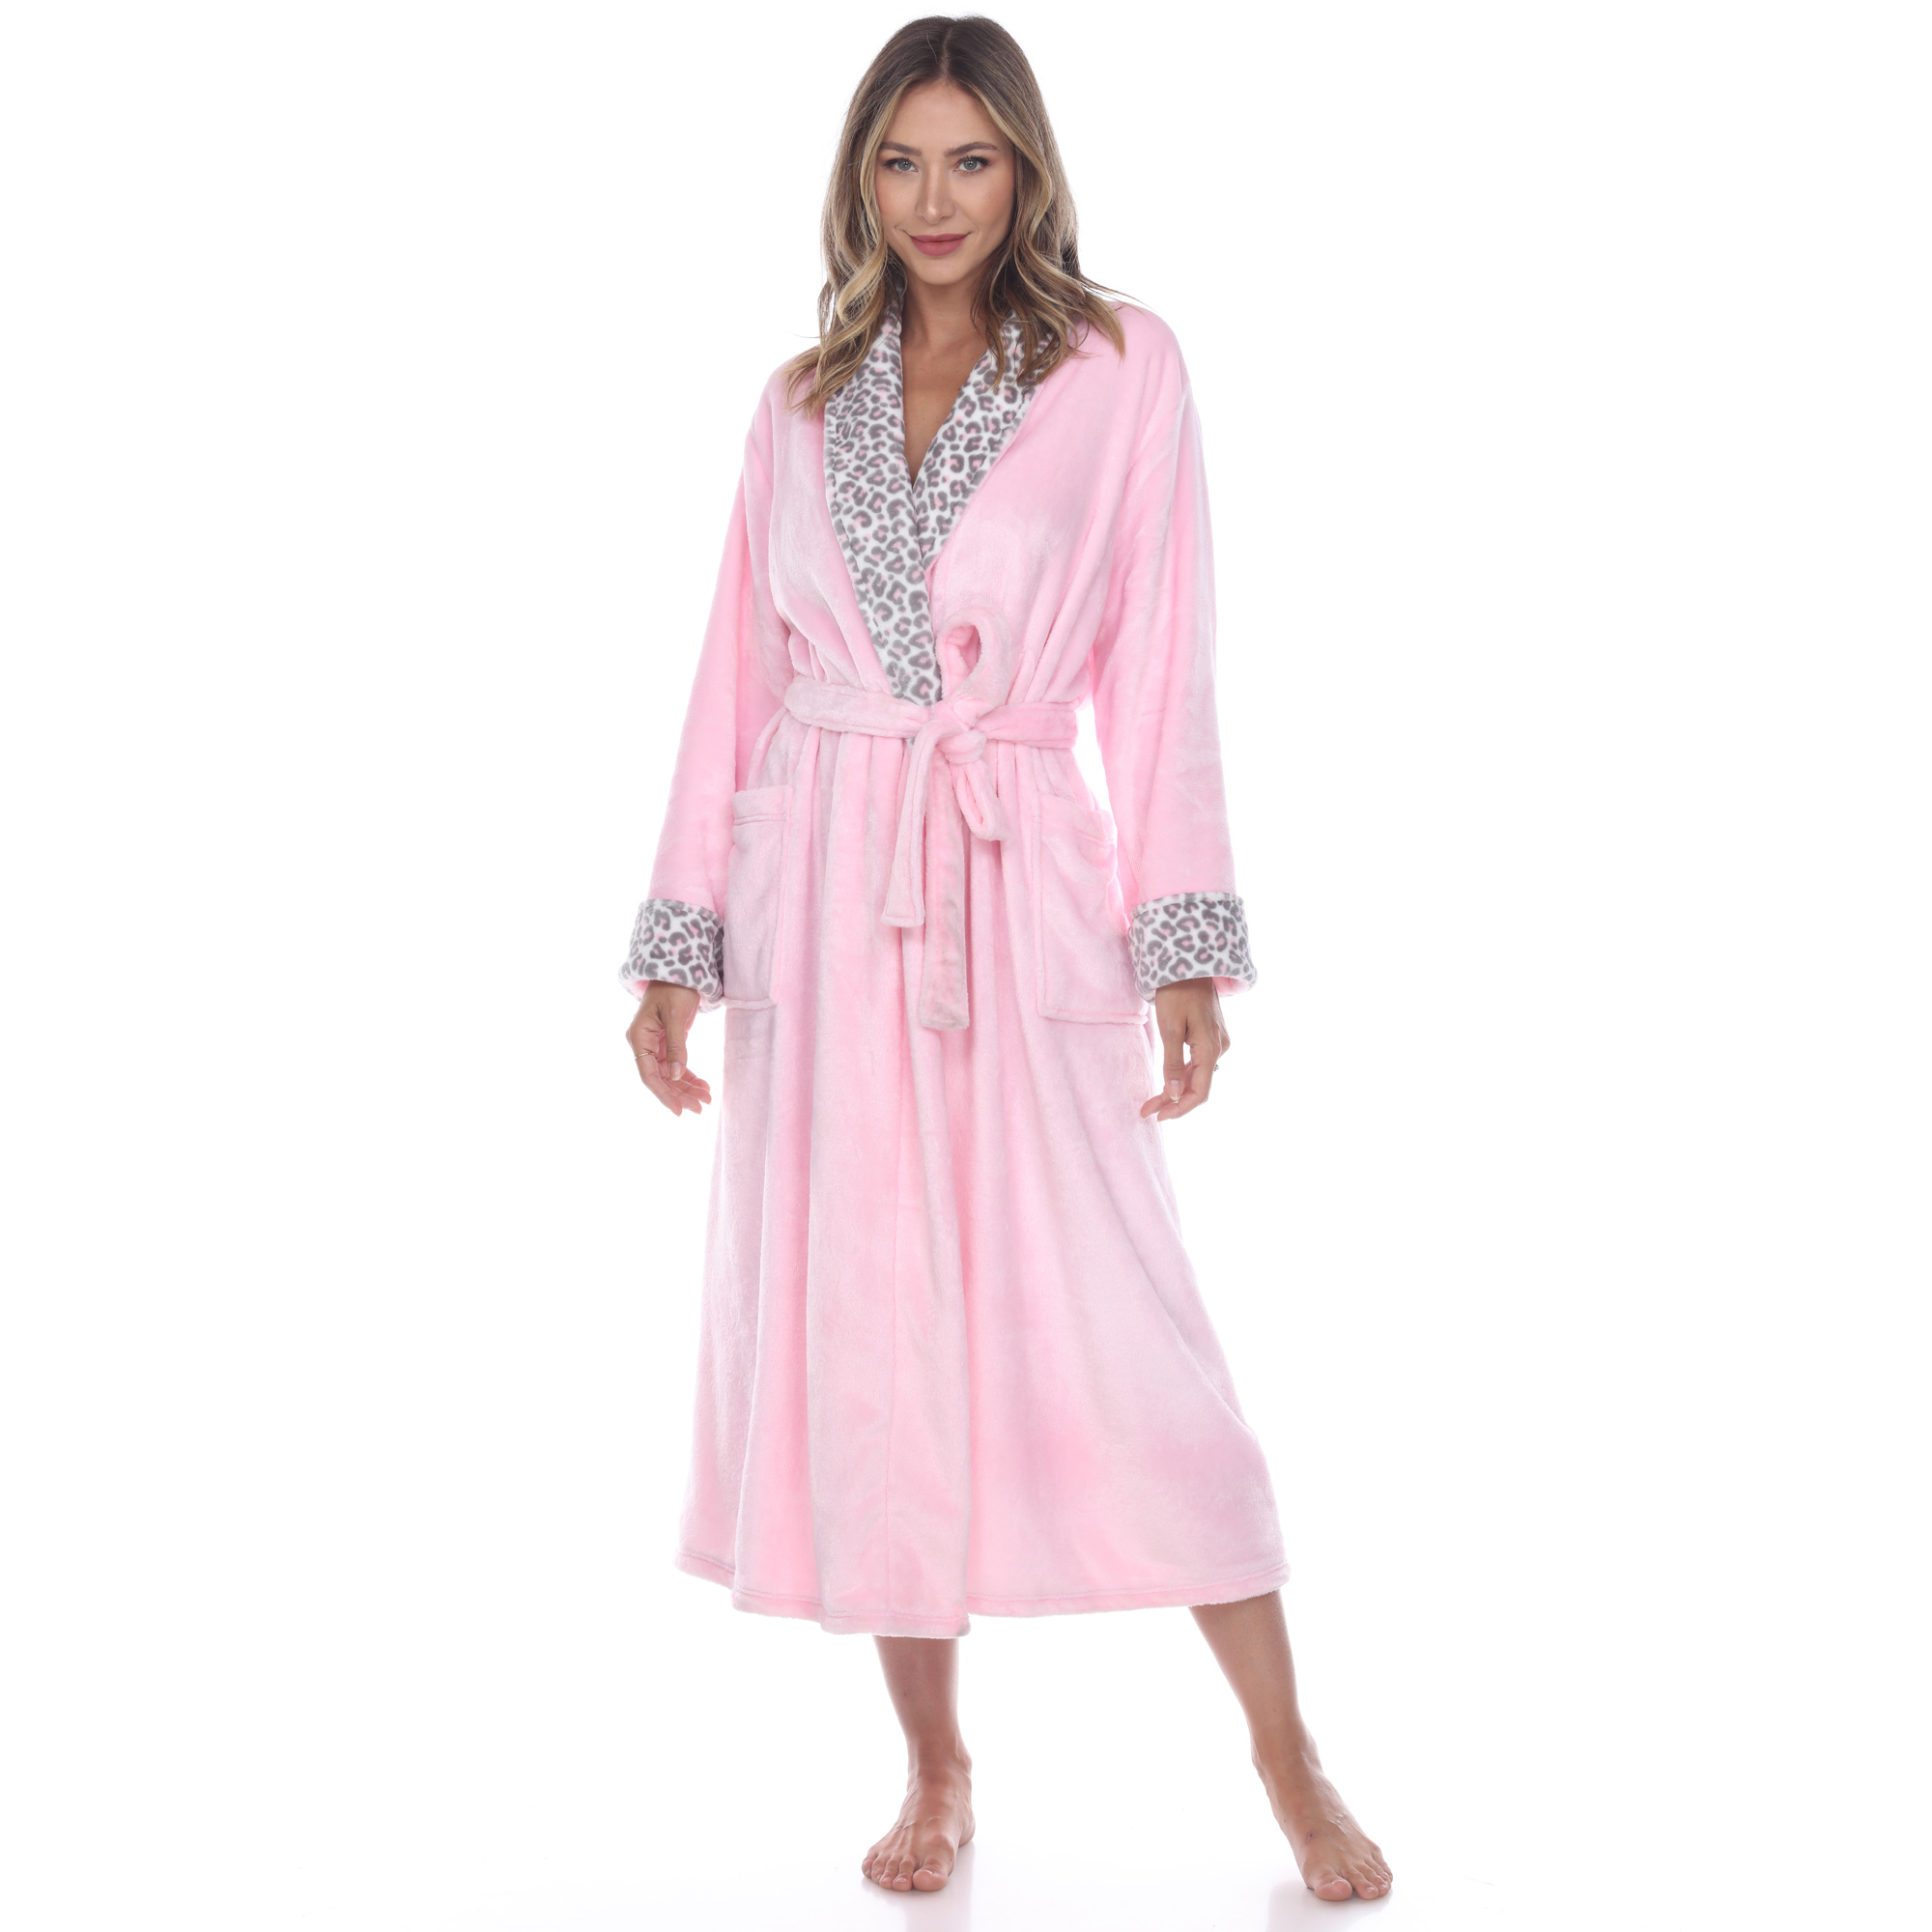 White Mark Women's Cozy Lounge Robe - Pink Leopard, 2X/3X